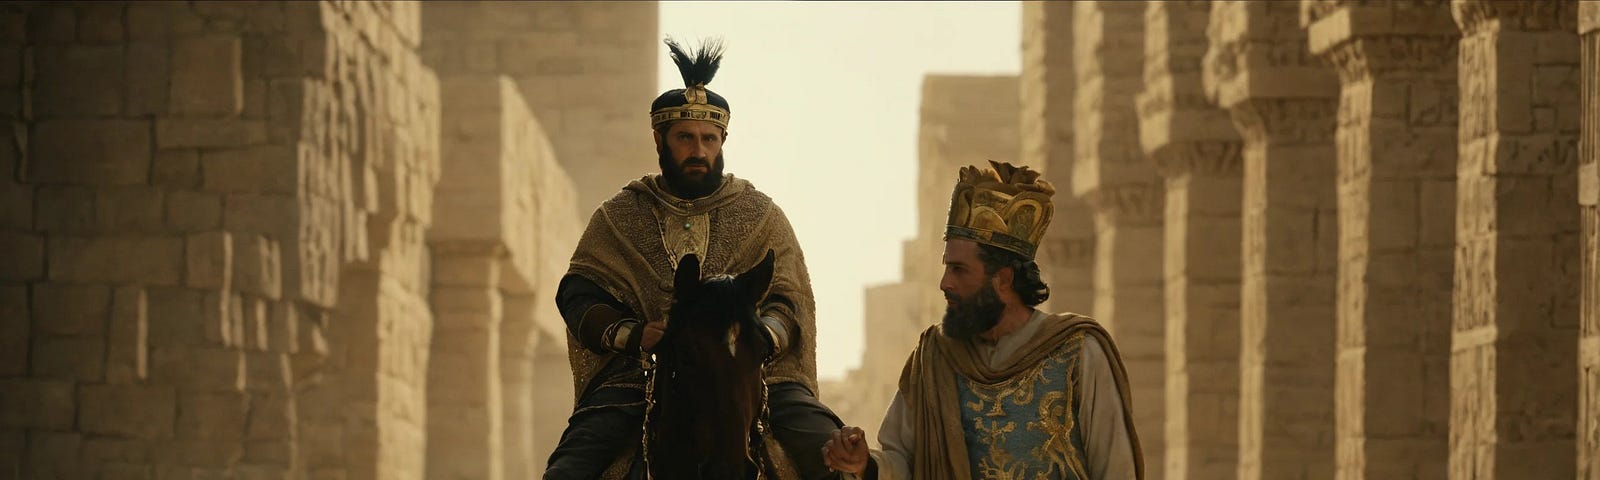 Prince Haman leading Mordecai through the streets of Babylon